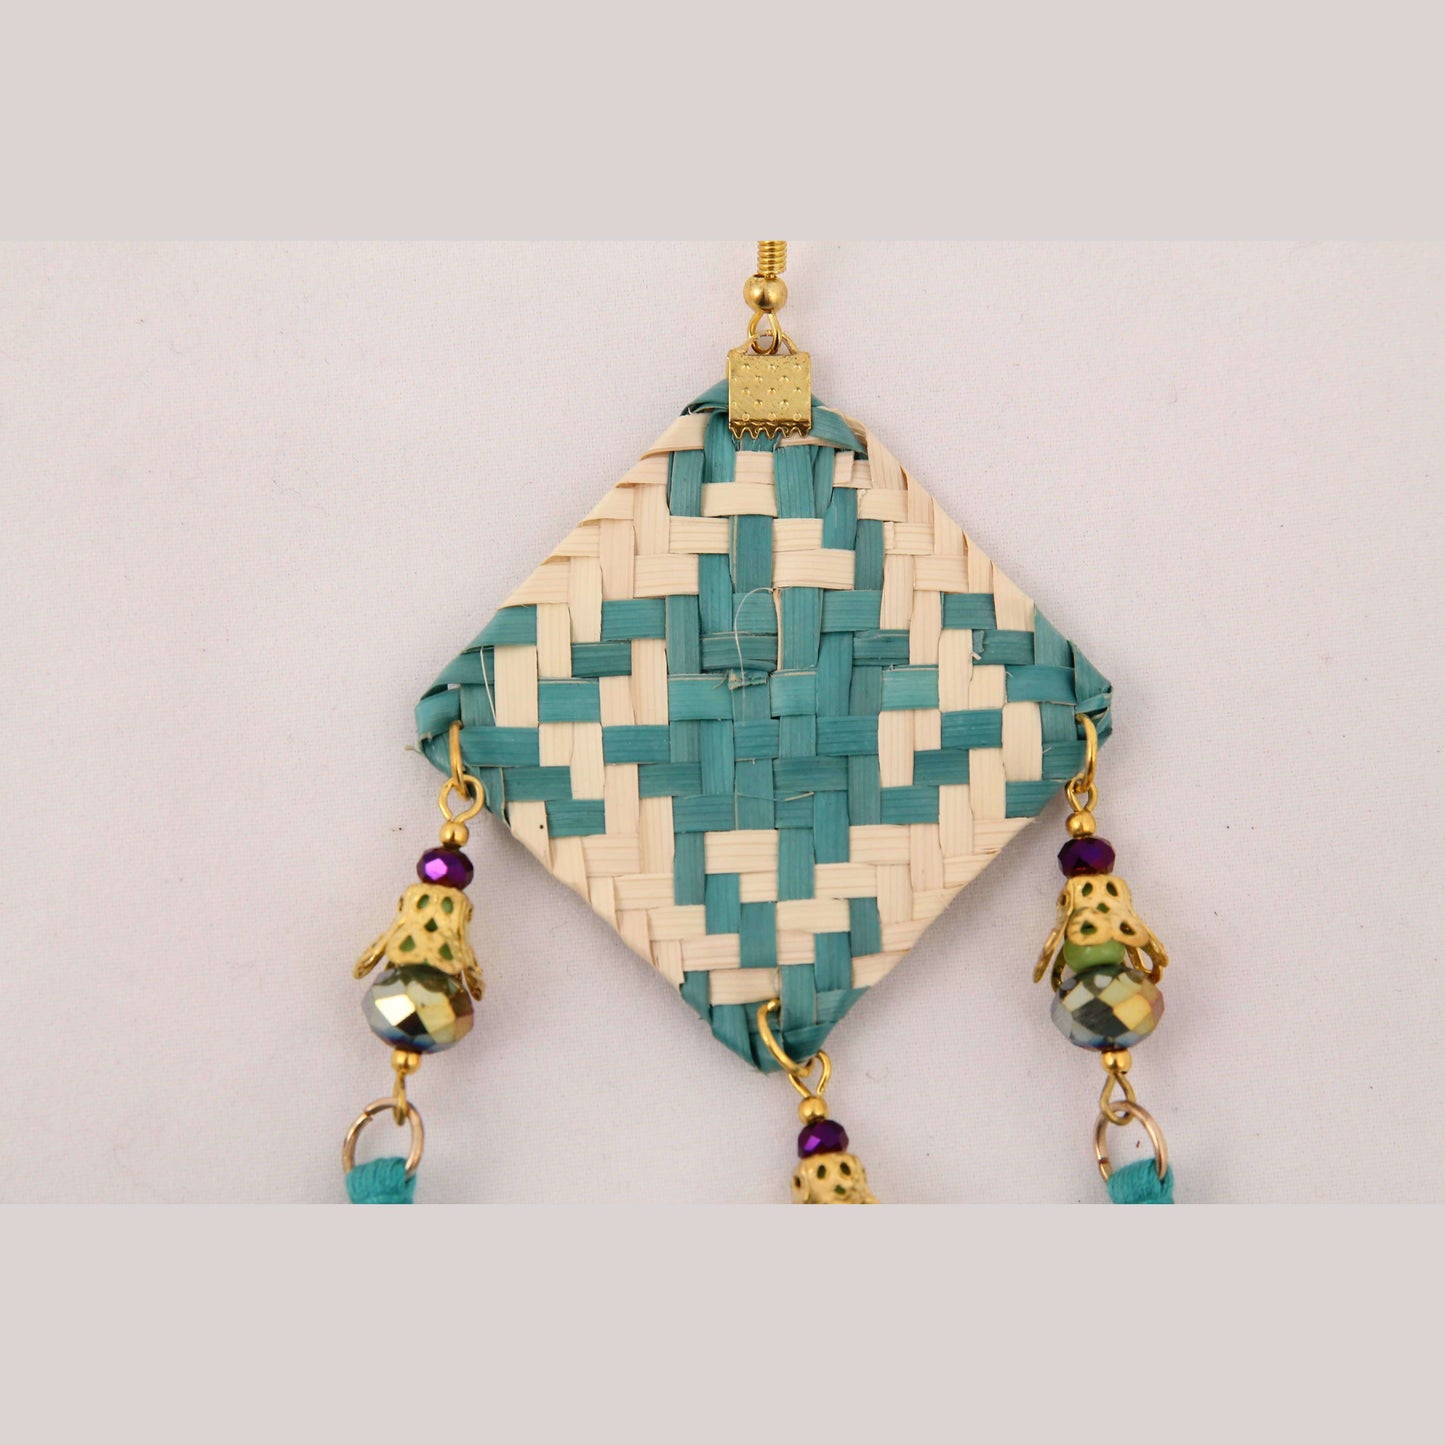 Hand Crafted Woven Palm Earrings Jewelry Mexican Folk Wearable Art Oaxaca Turq